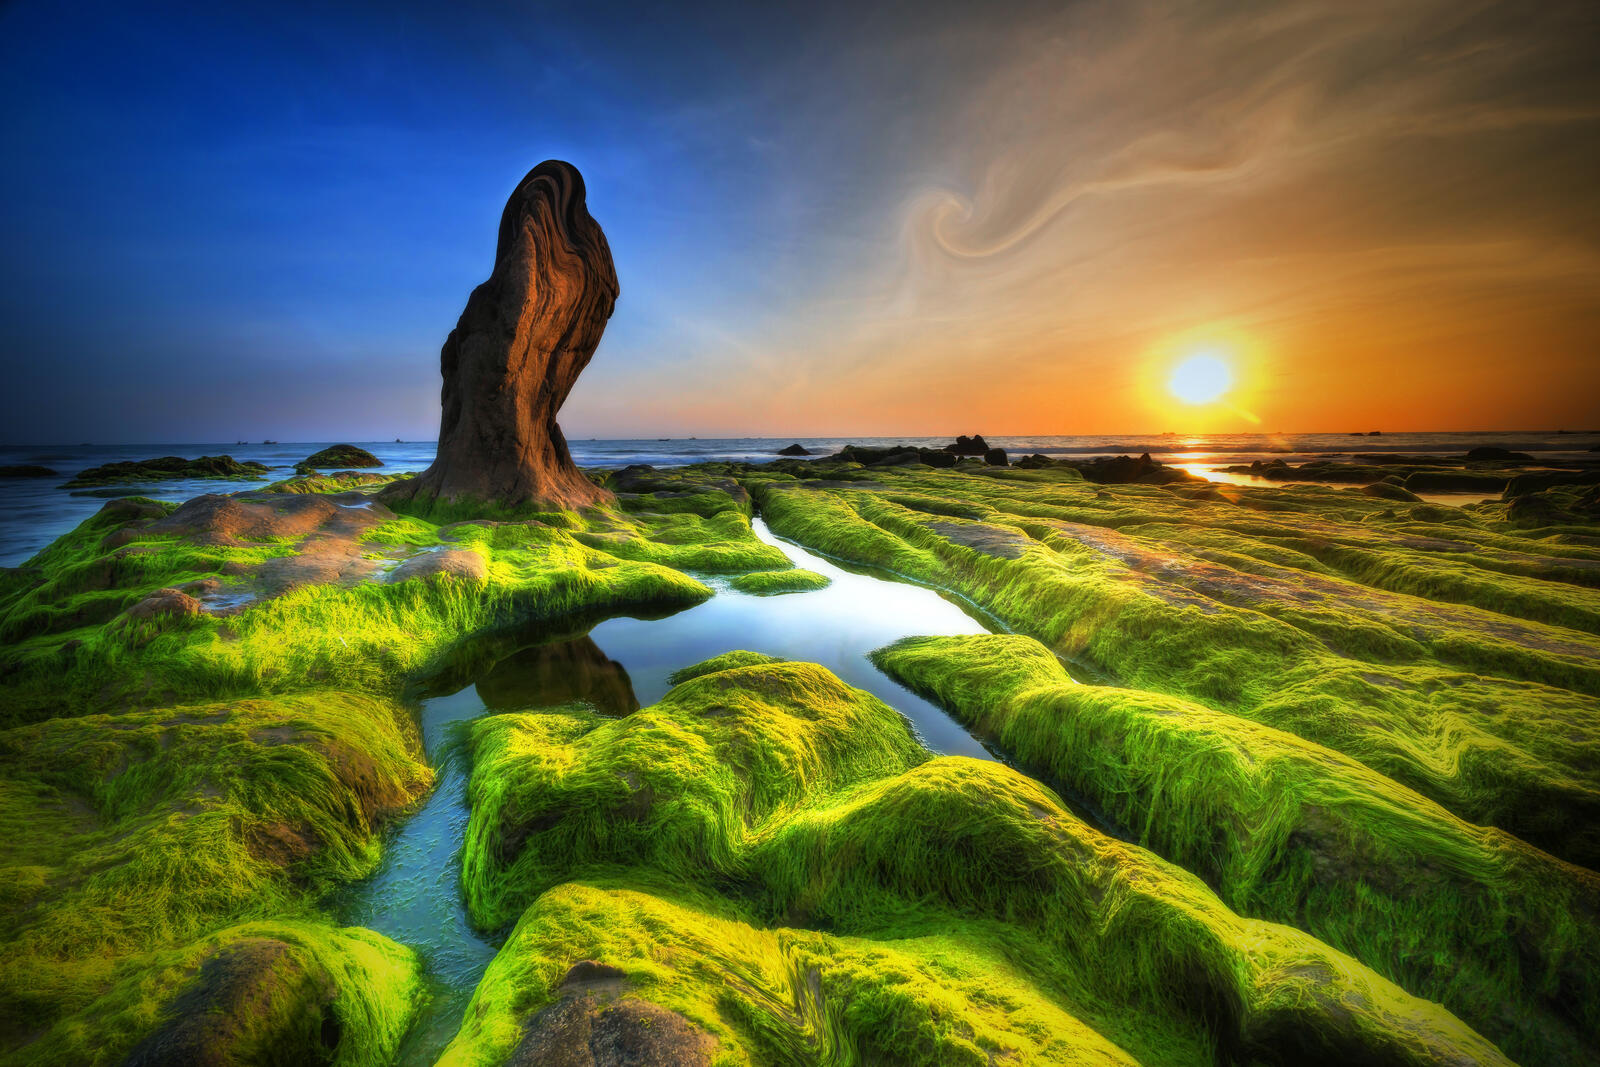 Wallpapers mossy rocks sea sunset on the desktop